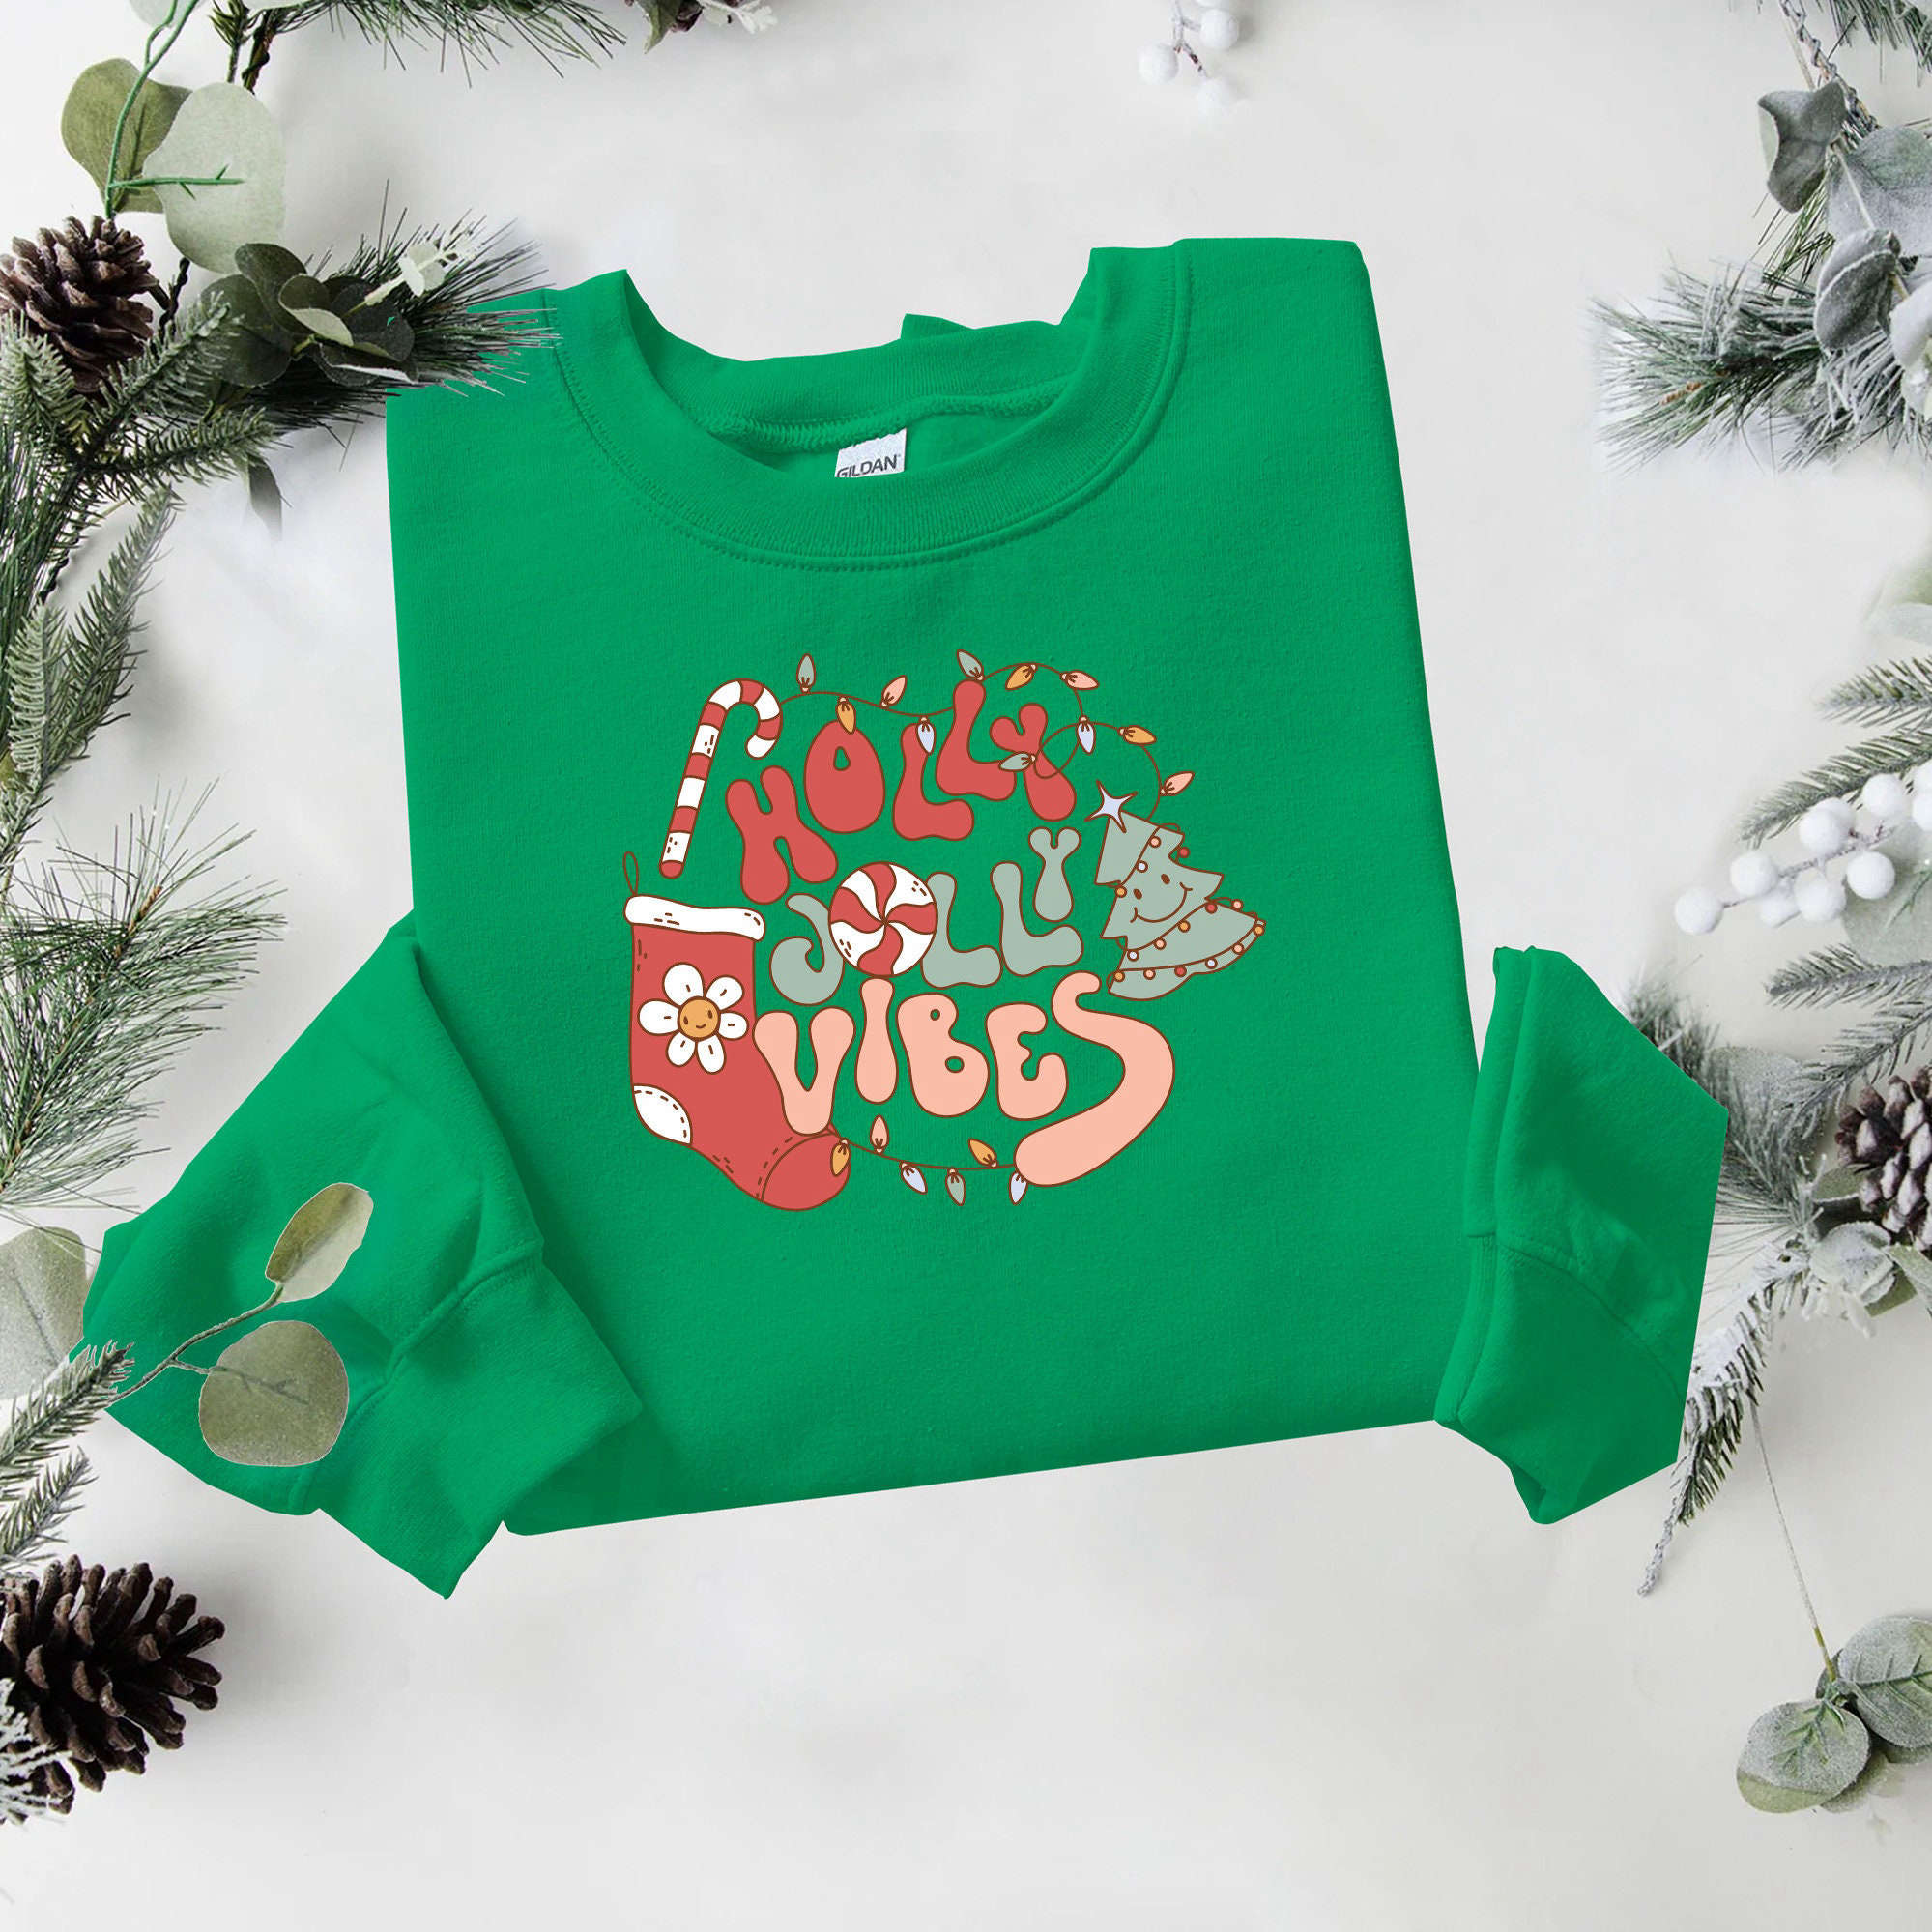 Holy Jolly Vibes Christmas Shirt, Christmas Sweatshirt, Womens Christmas Shirt, Christmas Gift, Christmas Sweater, Holiday Retro Sw eatshirt